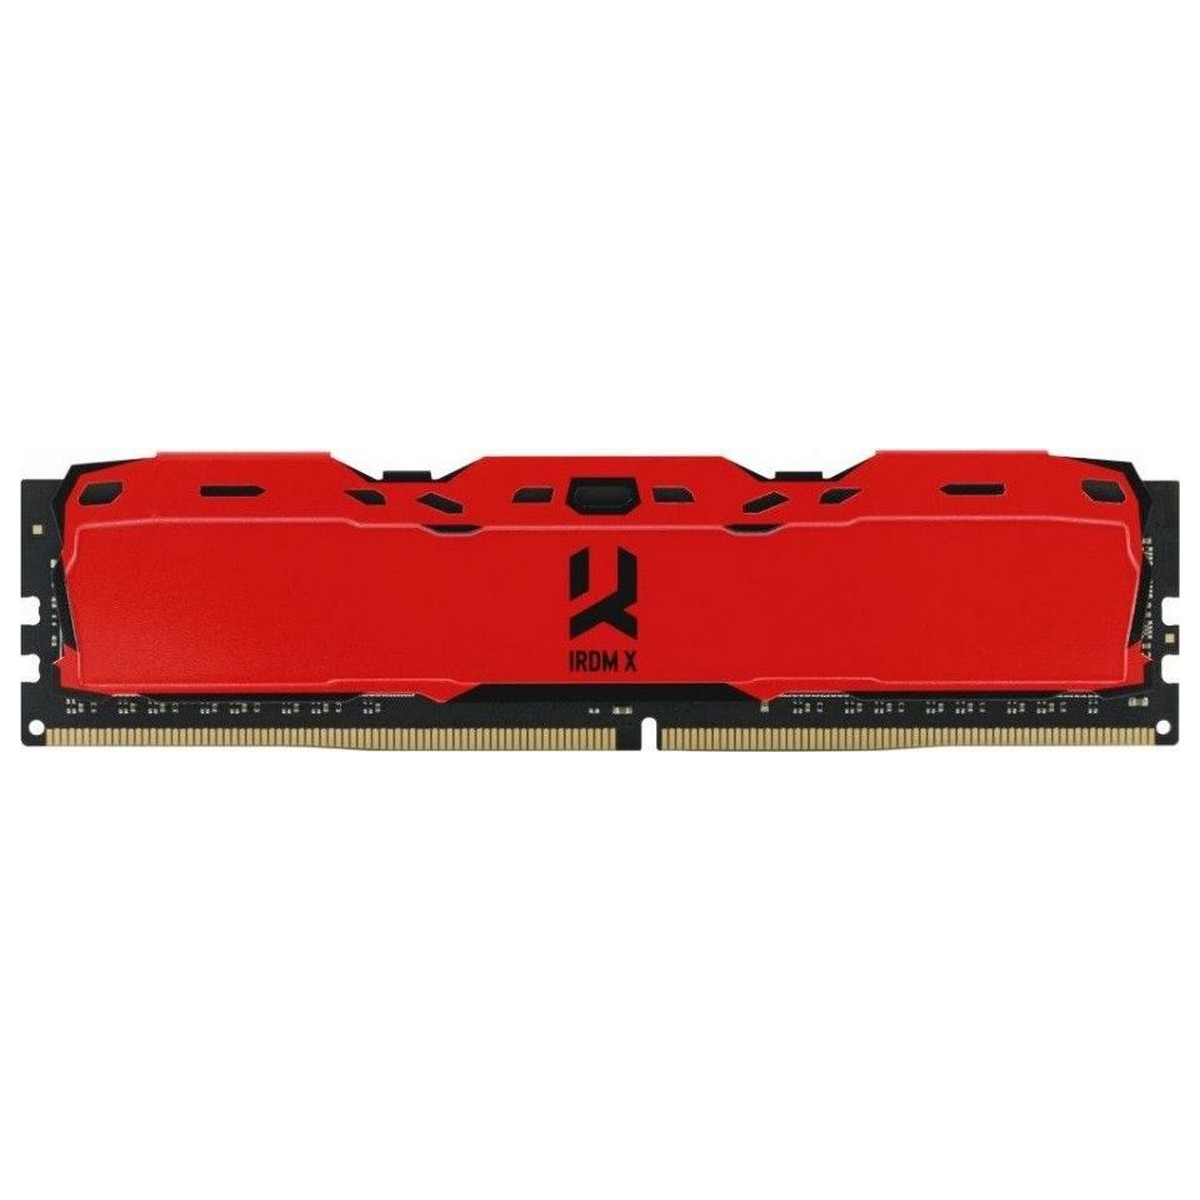 ОЗУ GOODRAM DDR4 8Gb 3200MHz IRDM X RED IR-XR3200D464L16SA/8G